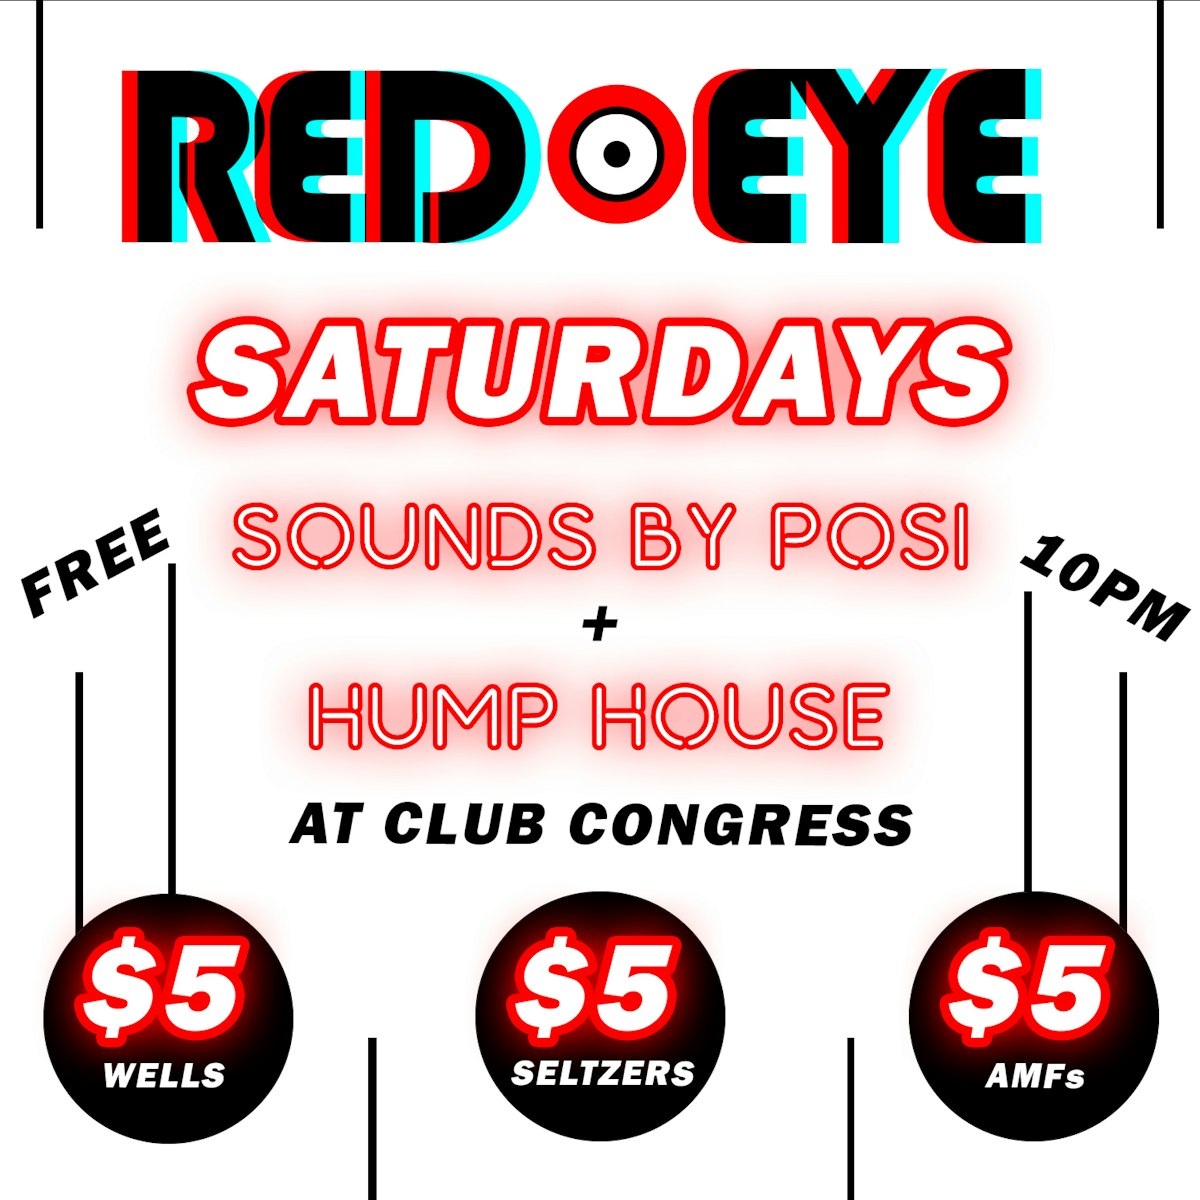 RED EYE at Club Congress (Saturdays)